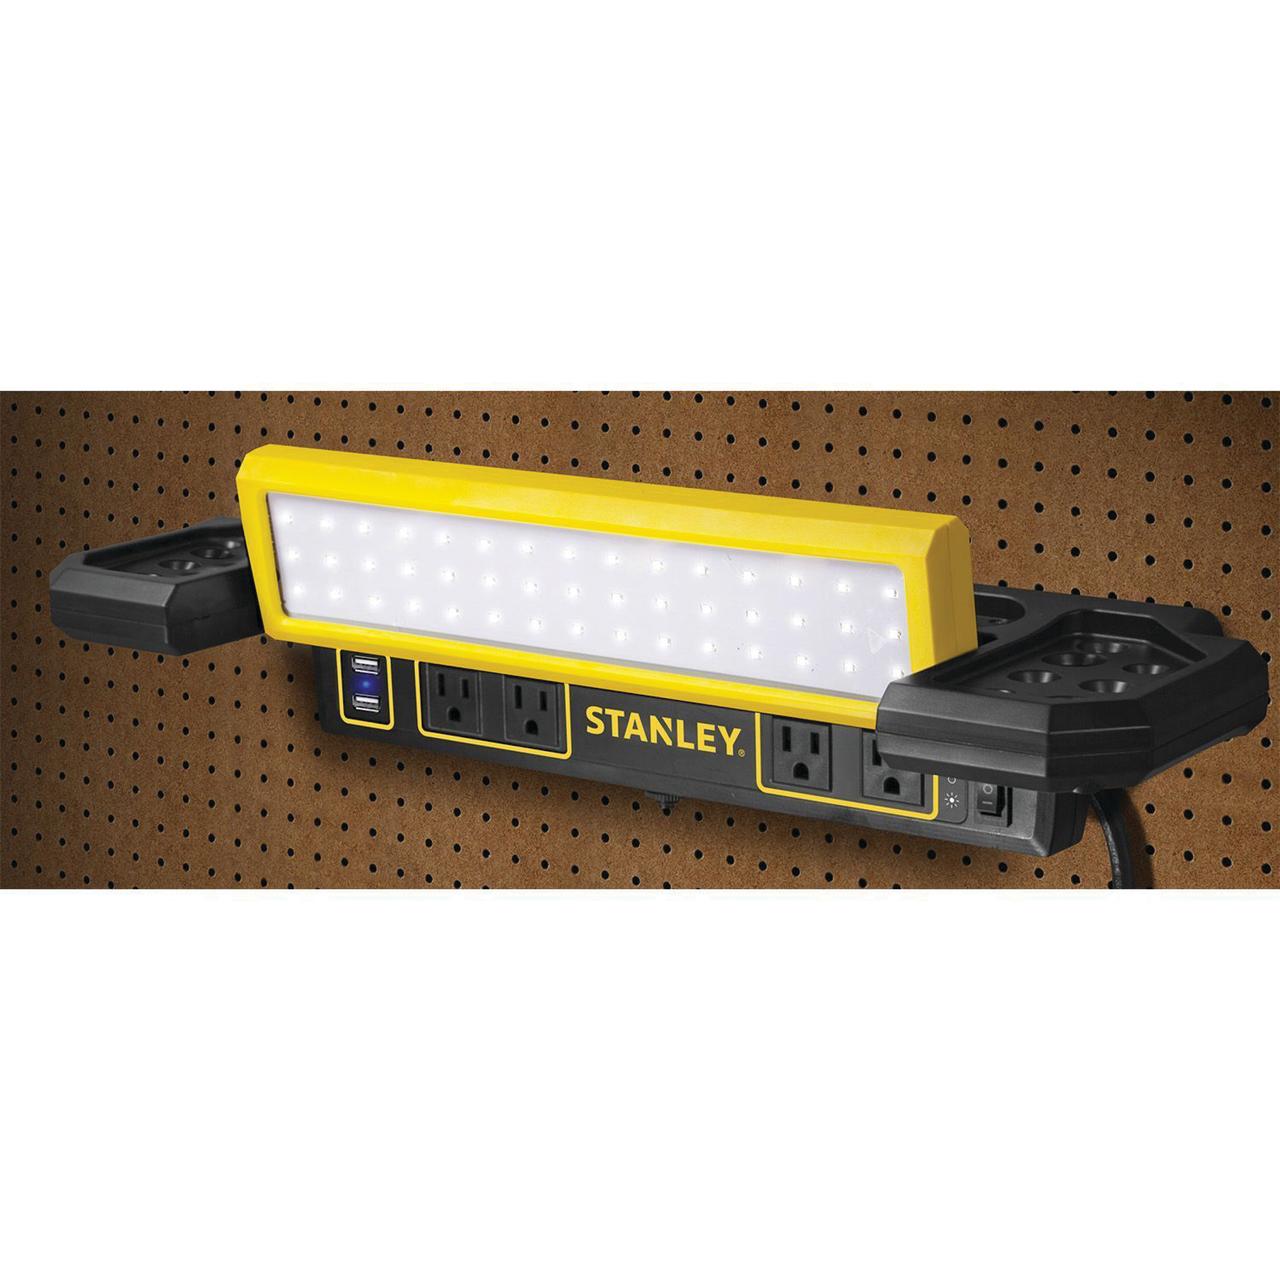 Stanley PSL1000S 1,000-Lumen Workbench Shop Light with Power Strip